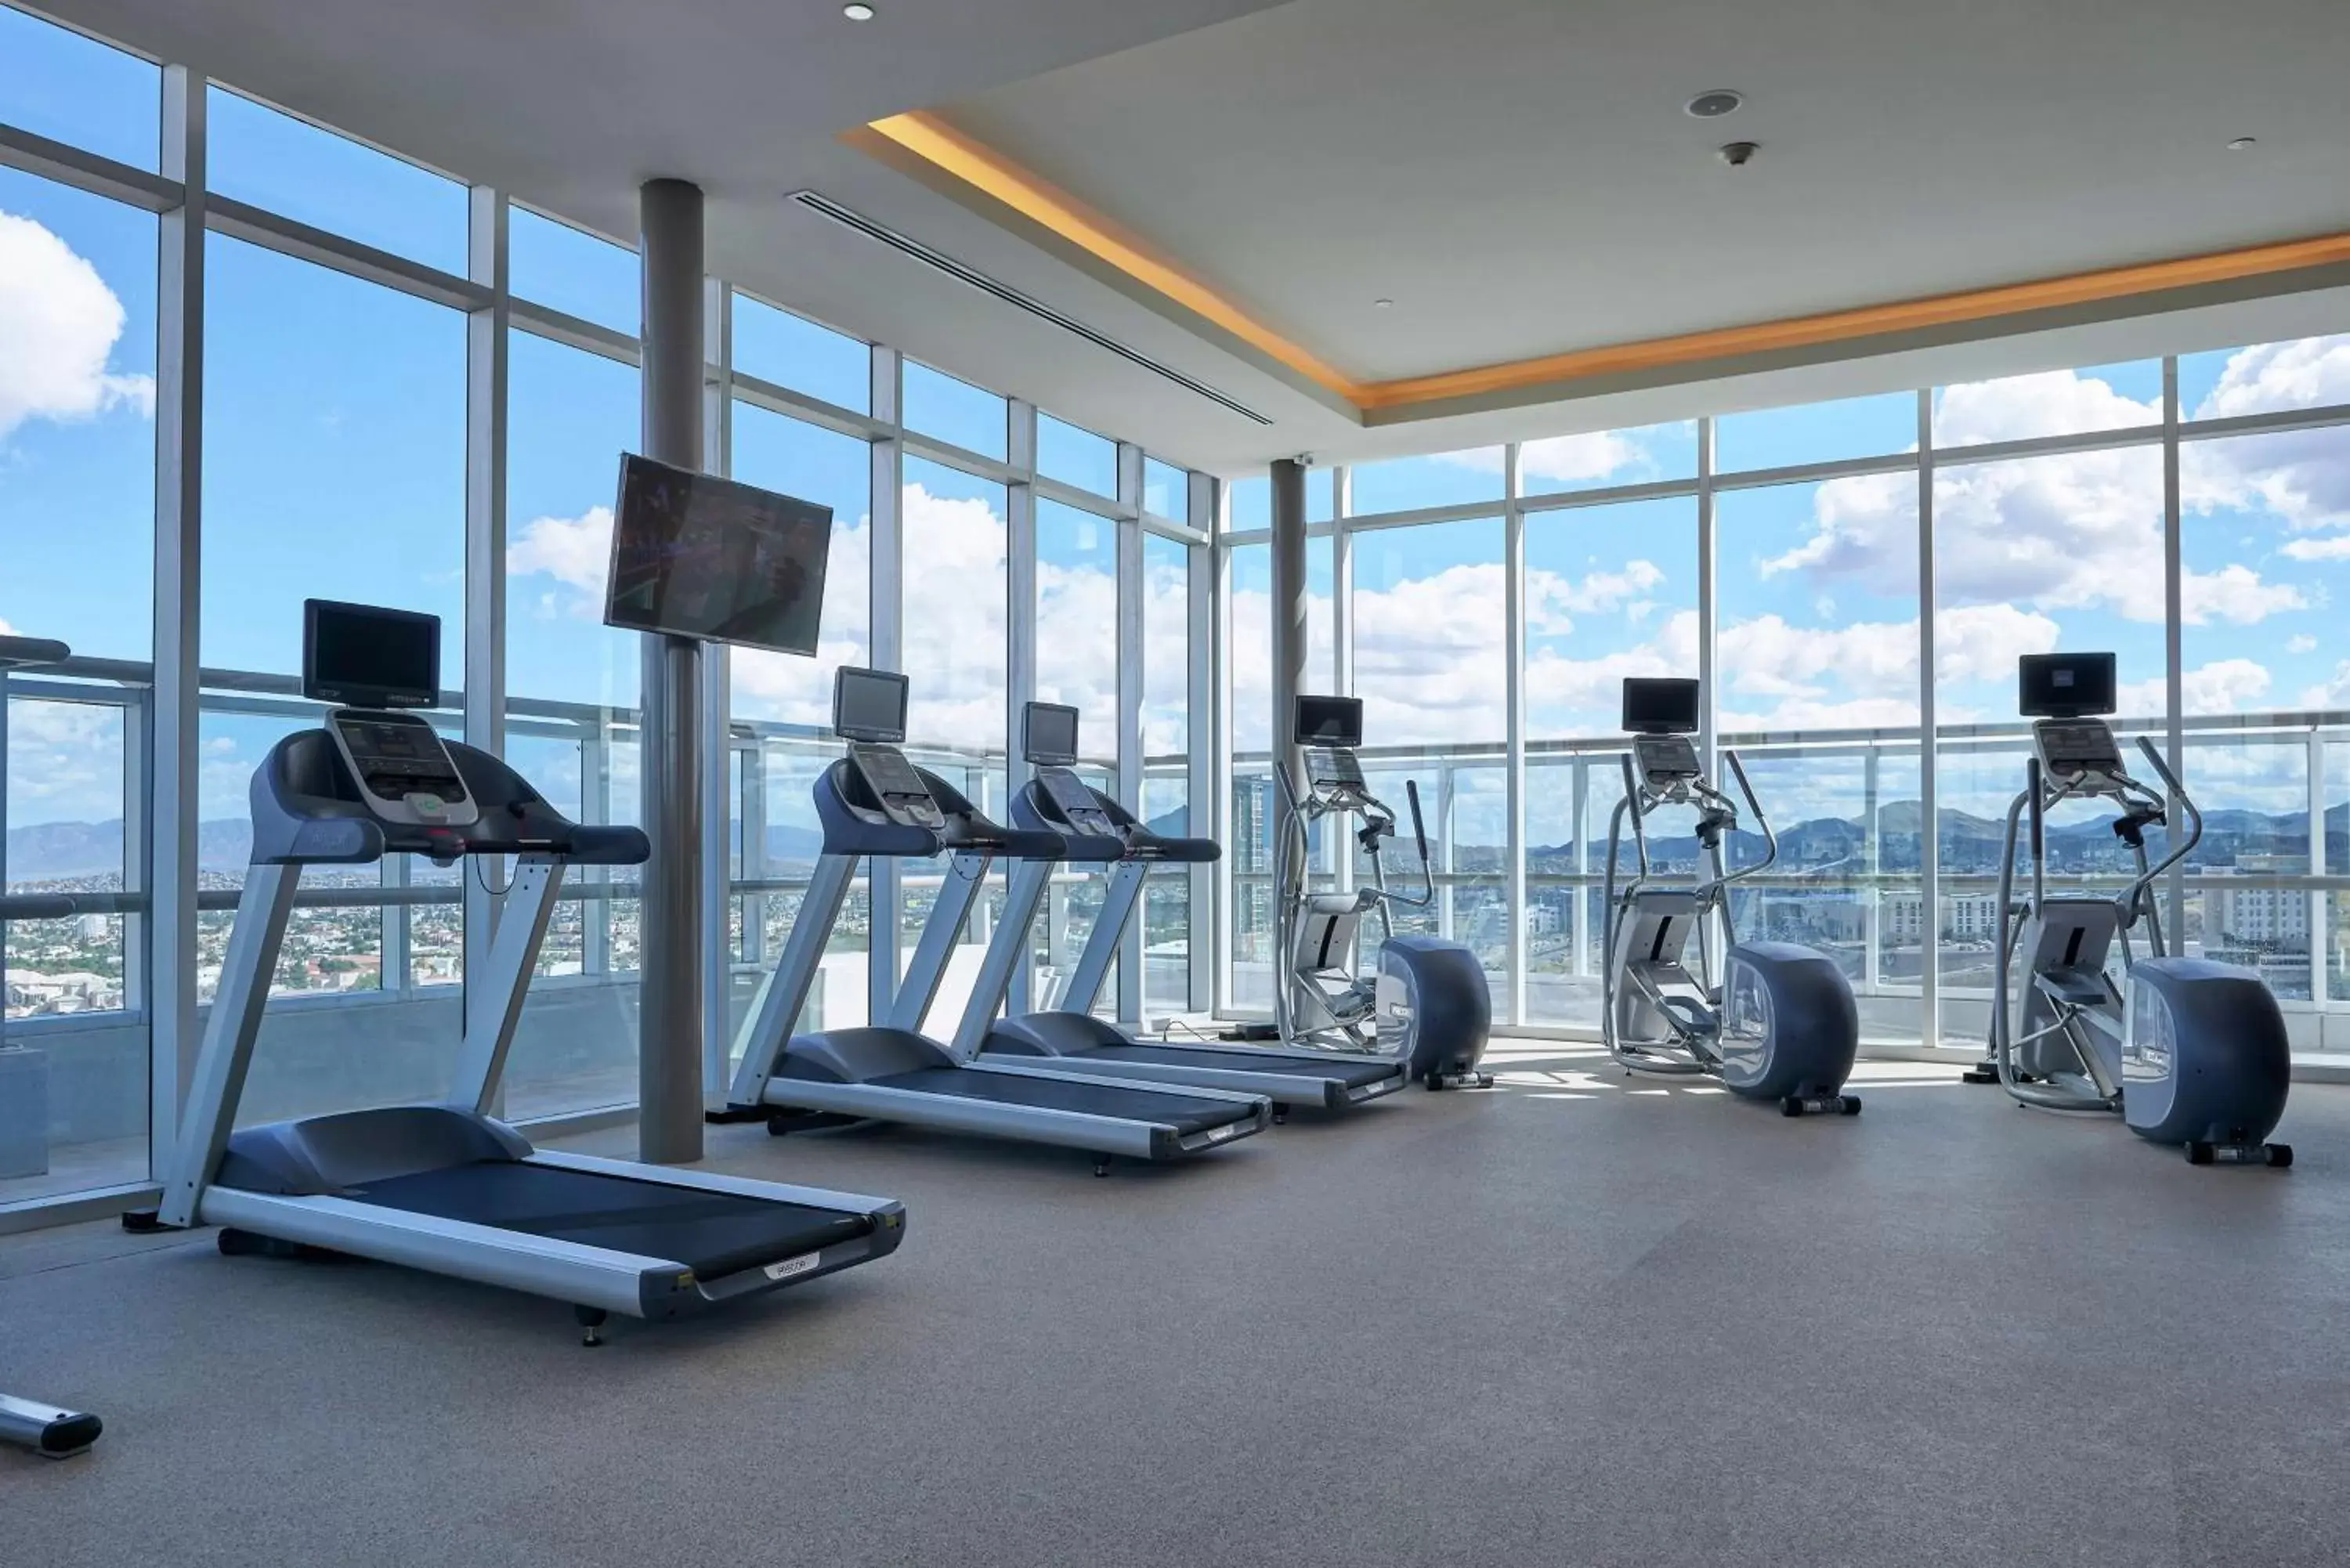 Fitness centre/facilities, Fitness Center/Facilities in Hilton Garden Inn Chihuahua